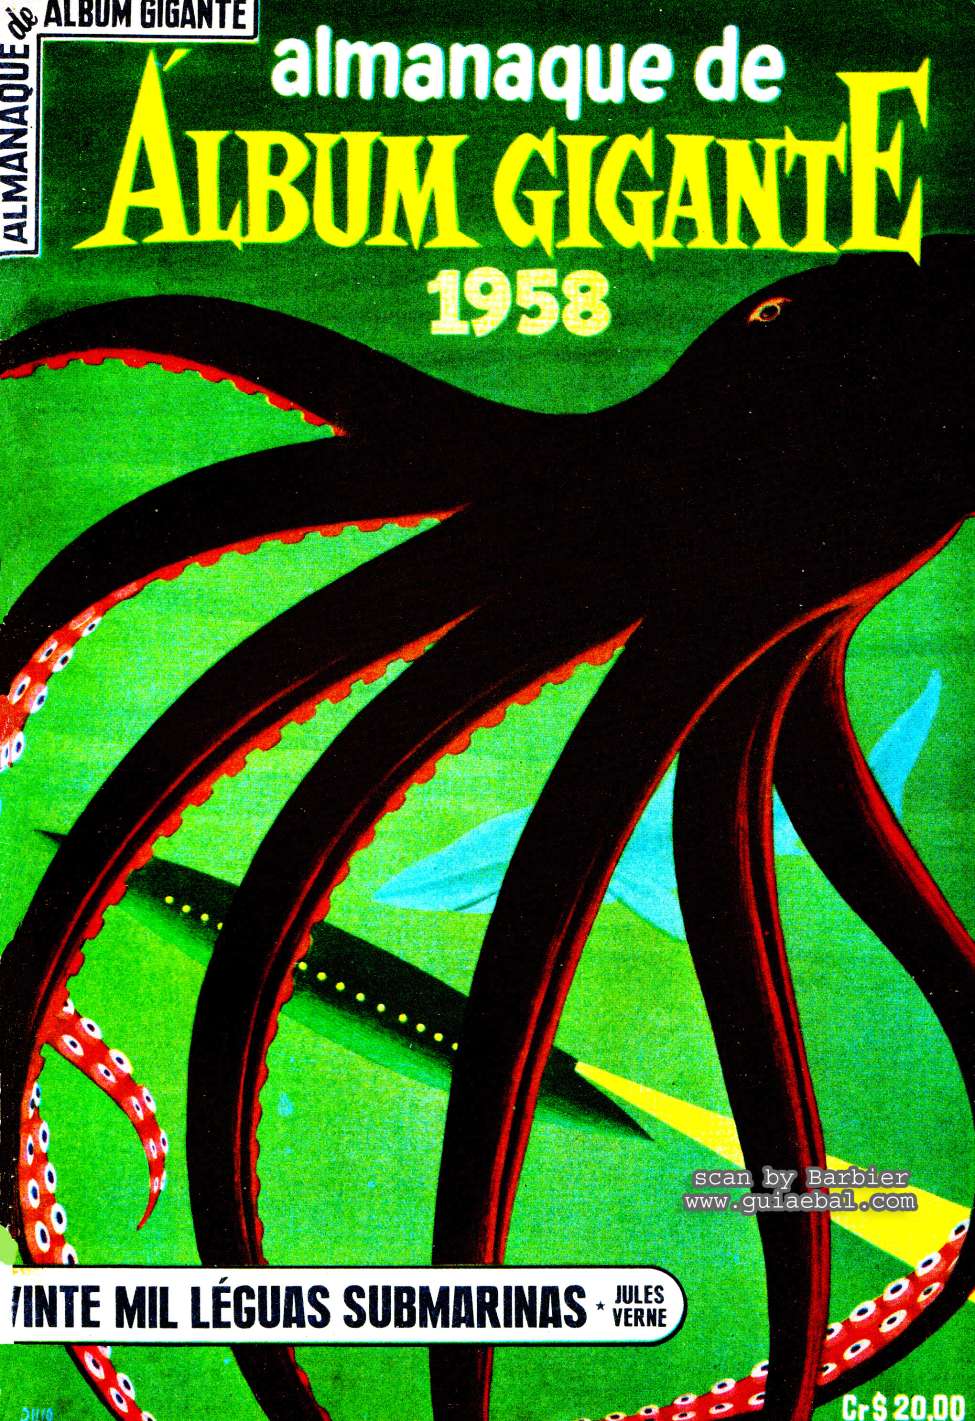 Book Cover For Almanaque Album Gigante 1958 - Vinte Mil Leguas Submarinas